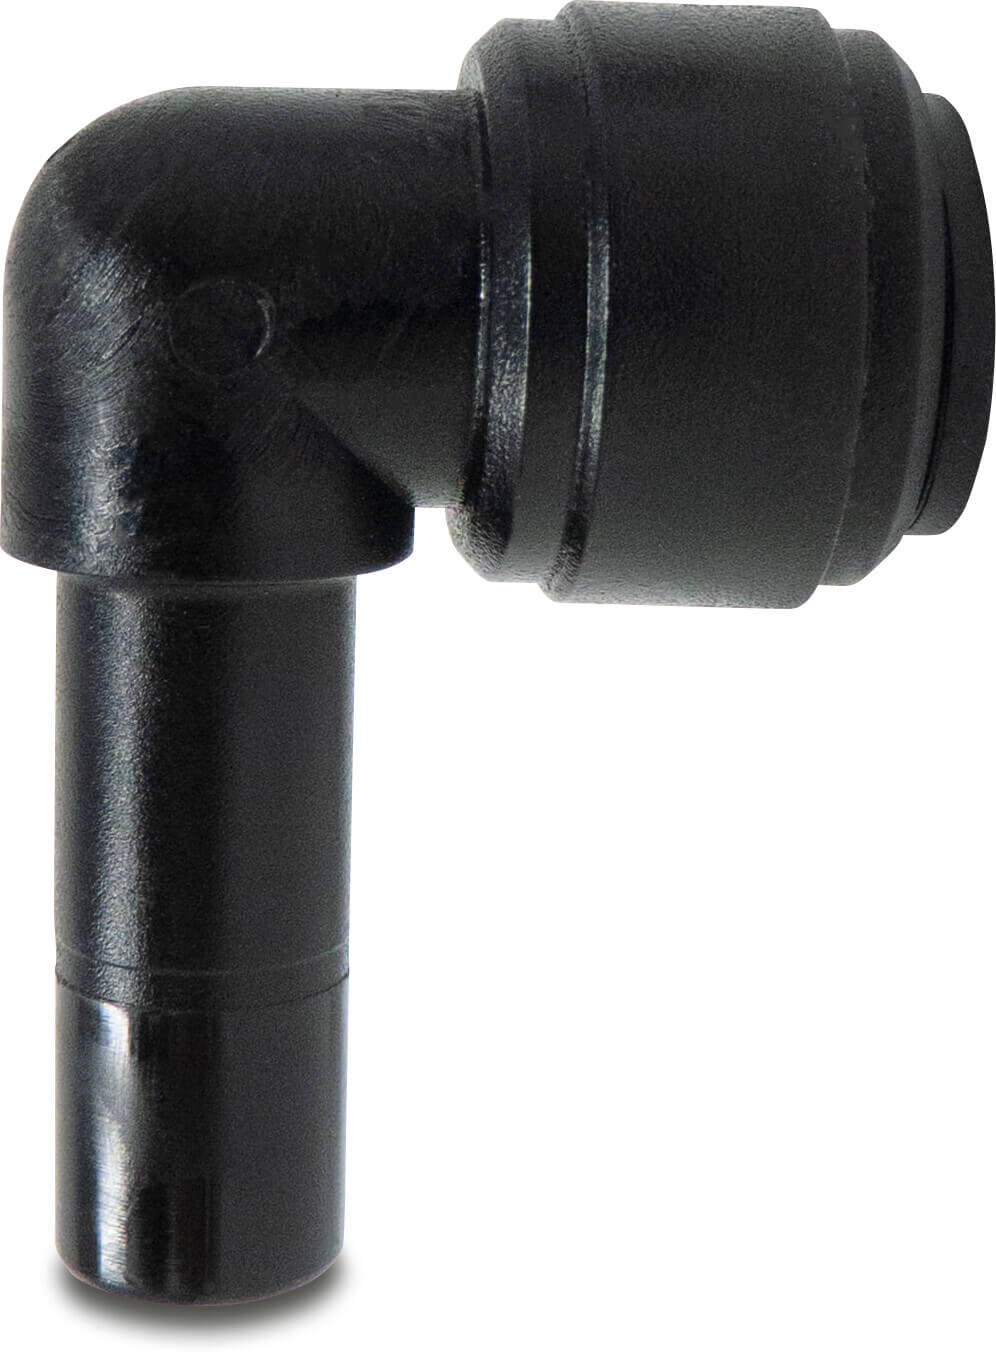 Union adaptor elbow 90° POM 4 mm spigot x push-in 20bar black WRAS type Aquaspeed